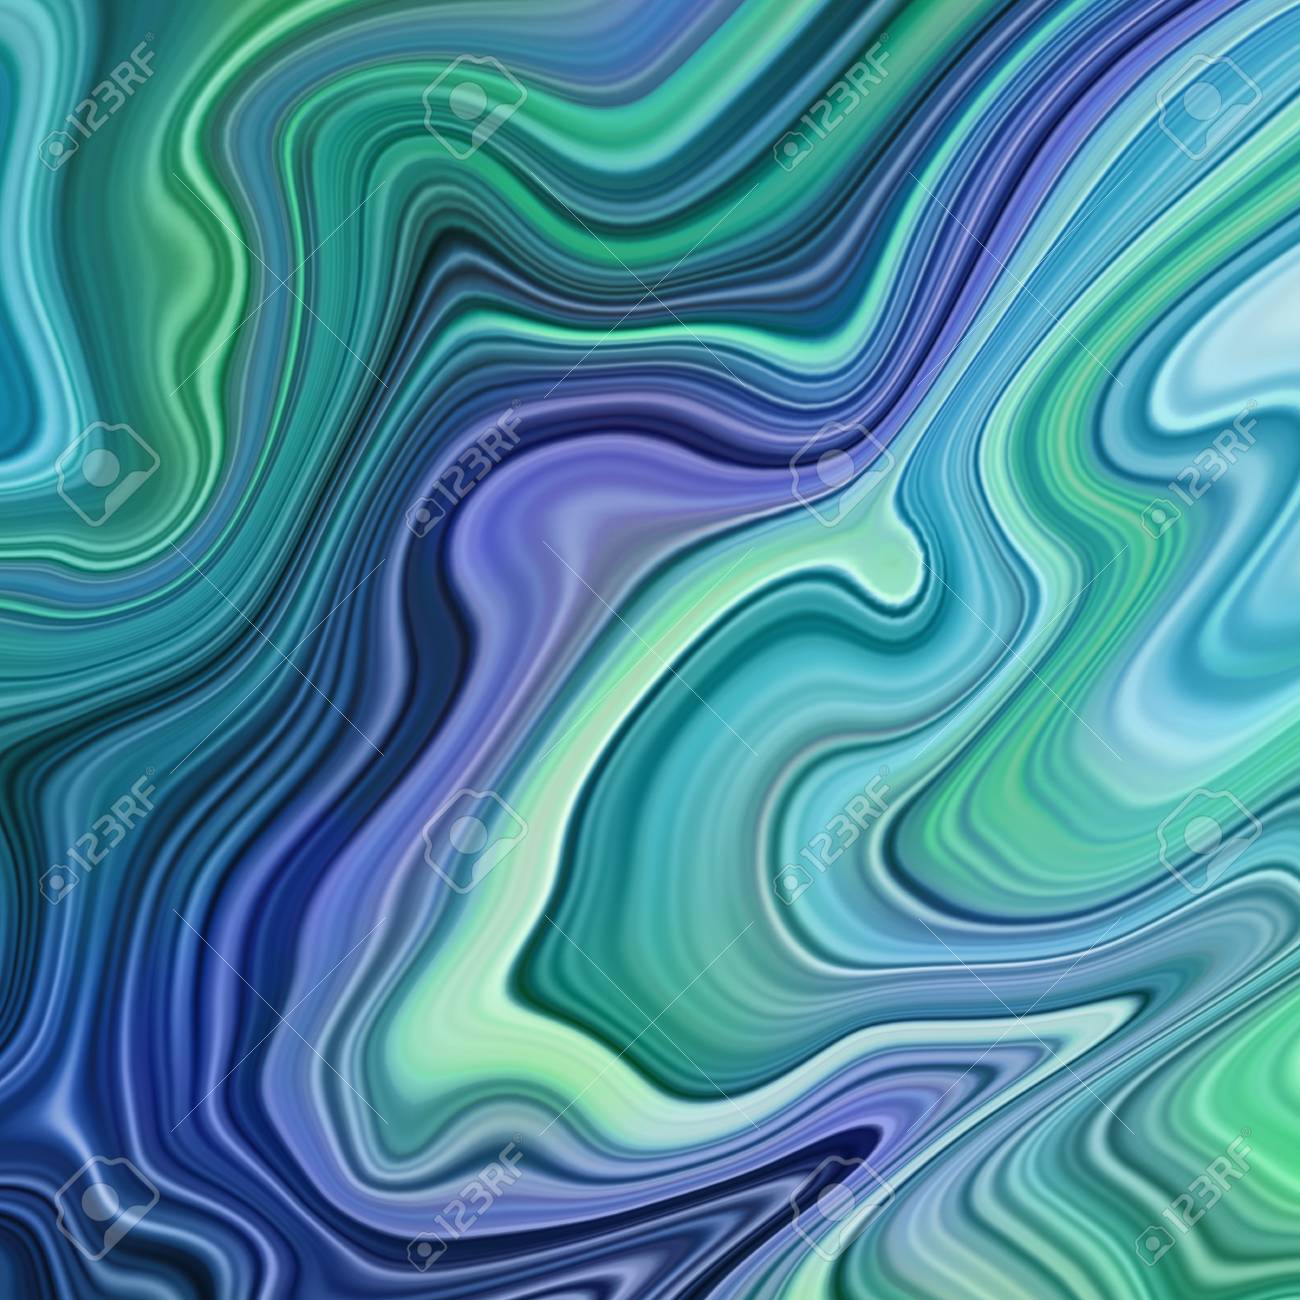 Abstract Background Blue Green Palette Vivid Fluid Art Marbling